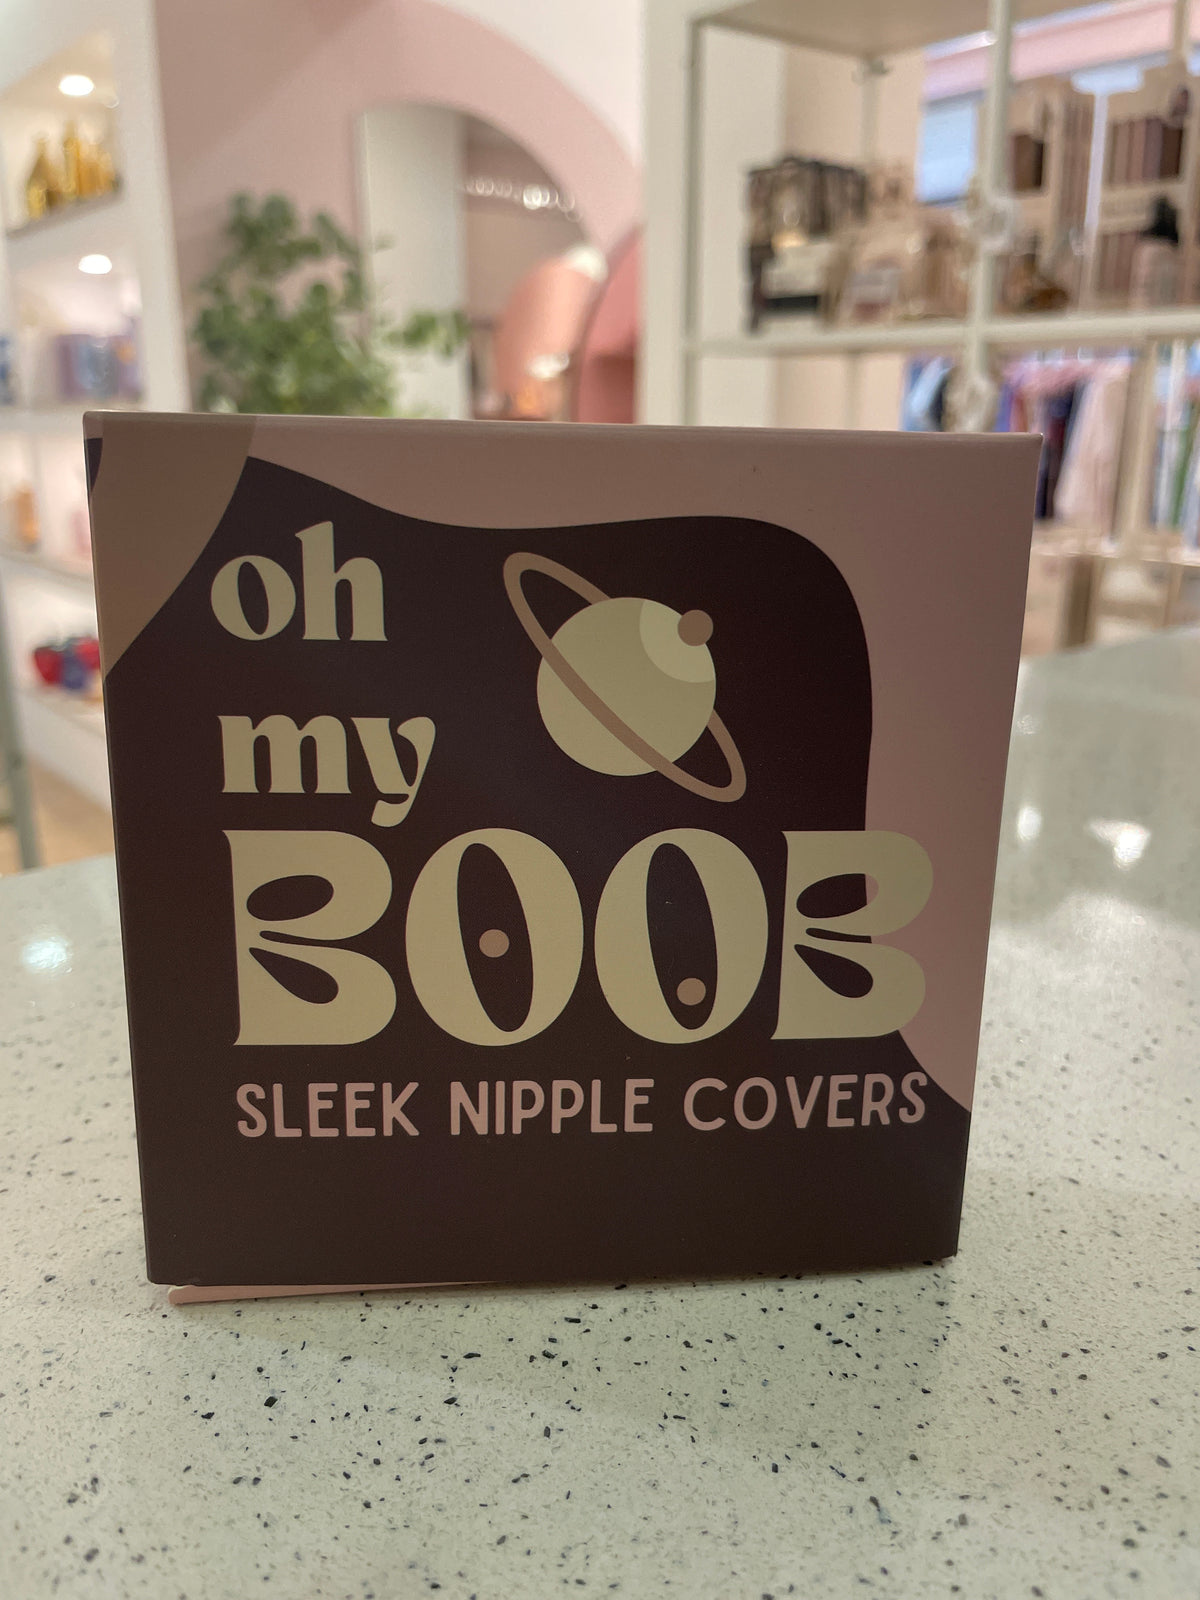 OH MY BOOB - Sleek Nipple Cover